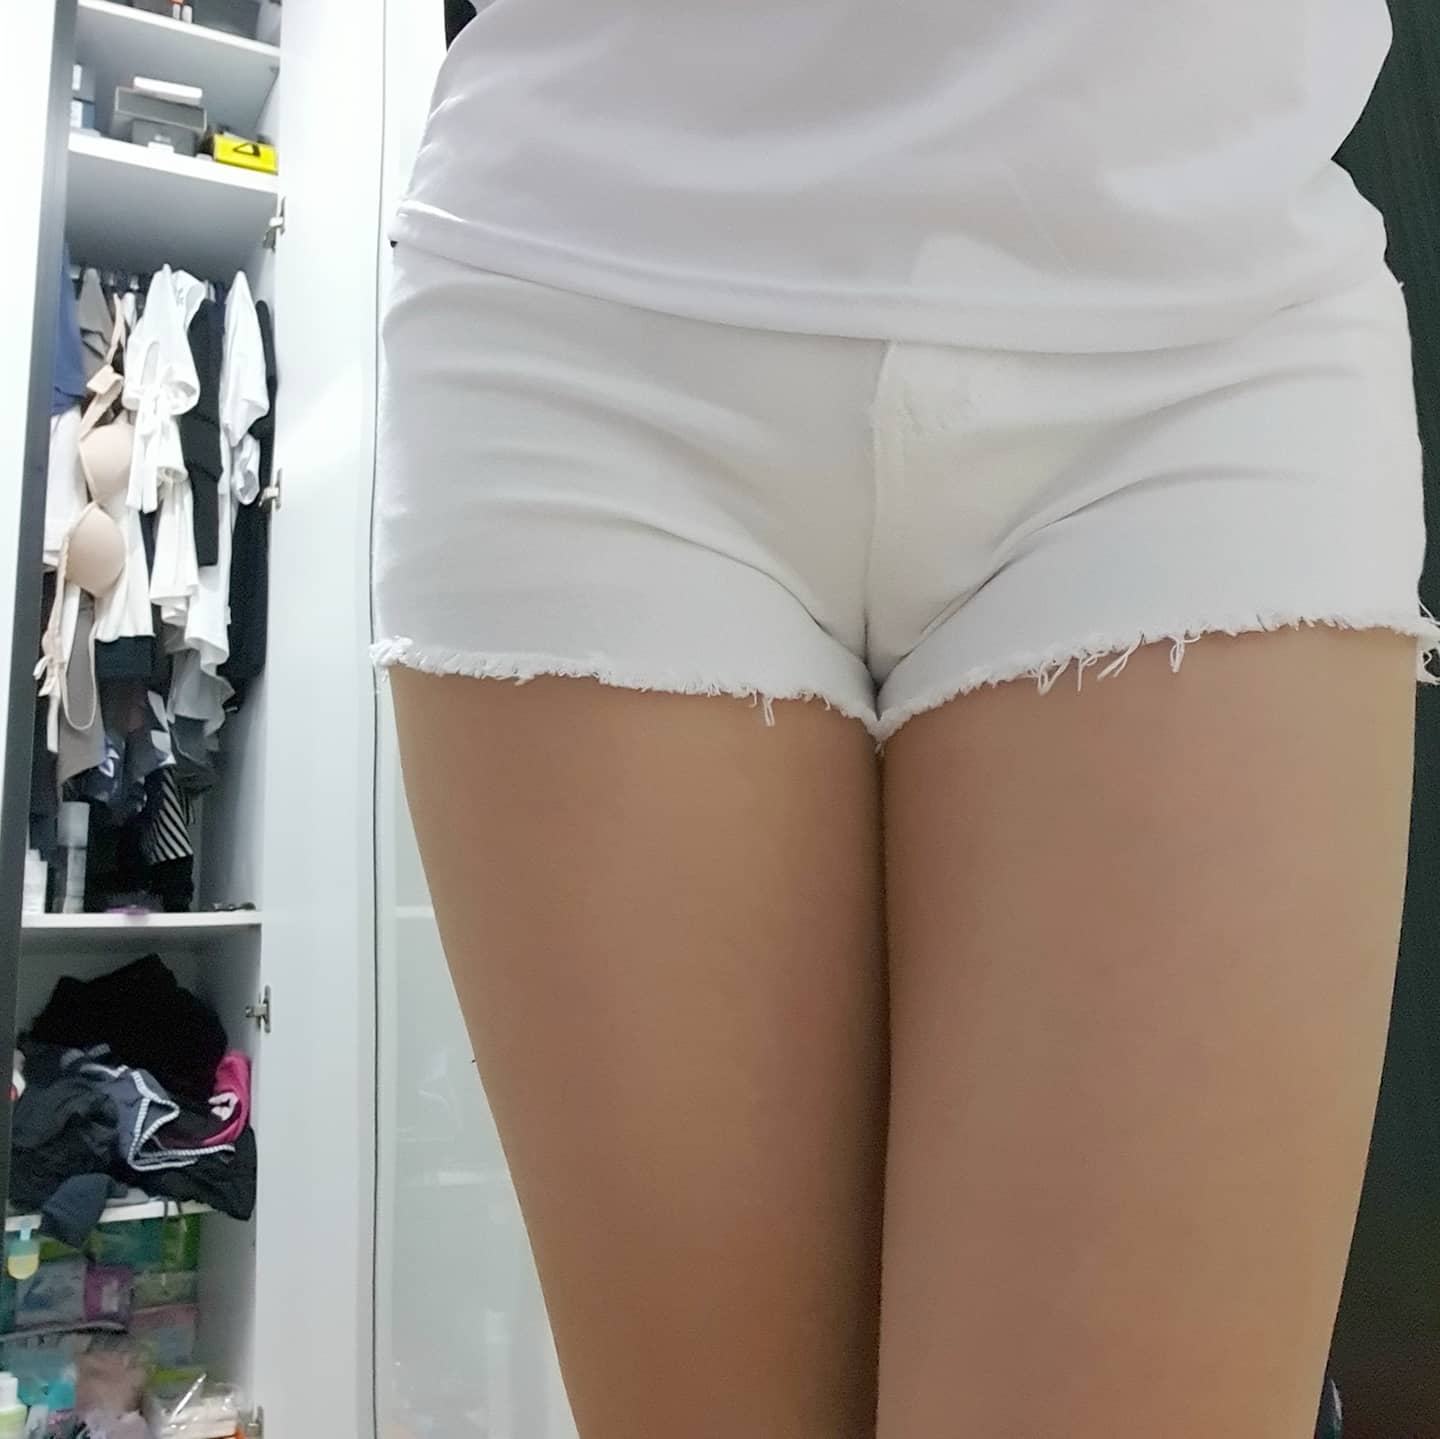 Ginagigi on X: New shorts. Got the camel toe effect! 😂😂😂 https